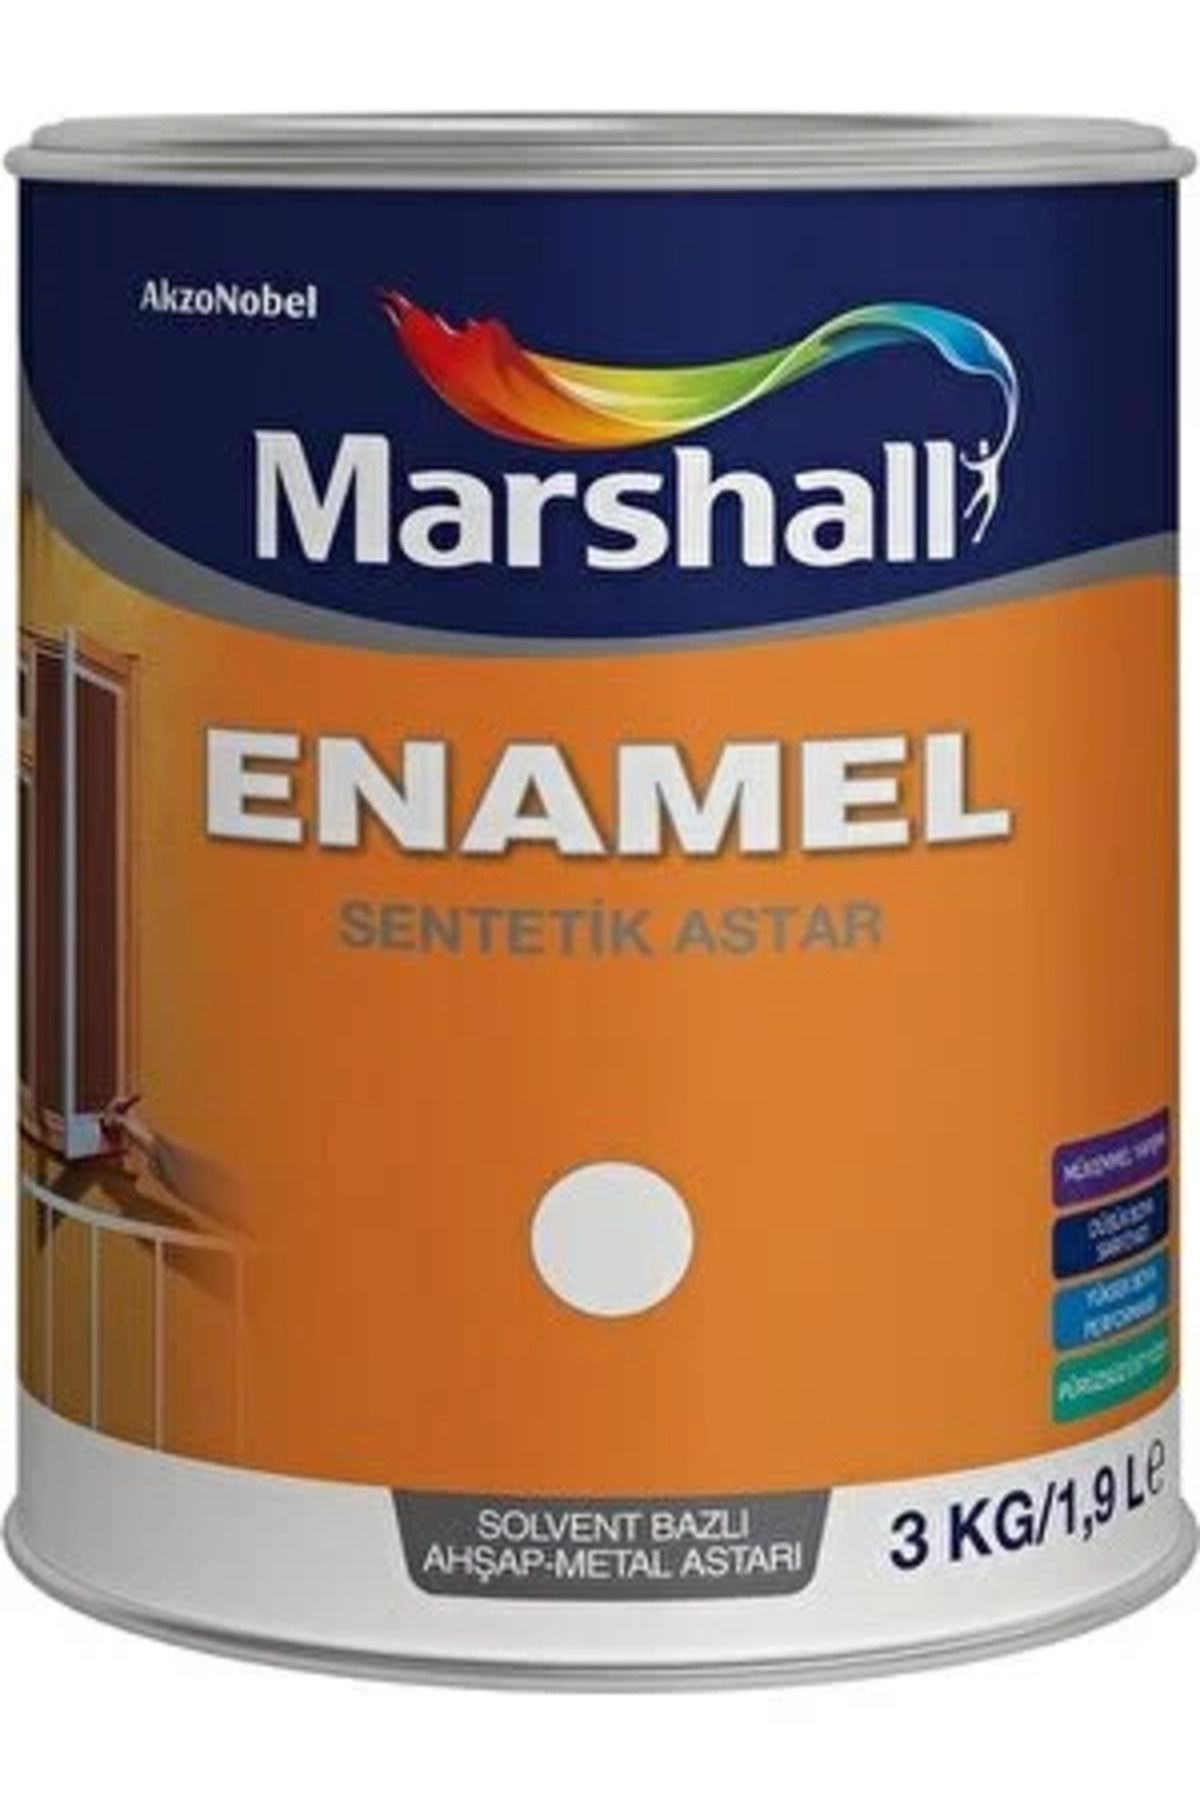 Marshall Enamel Sentetik Astar 3 kg